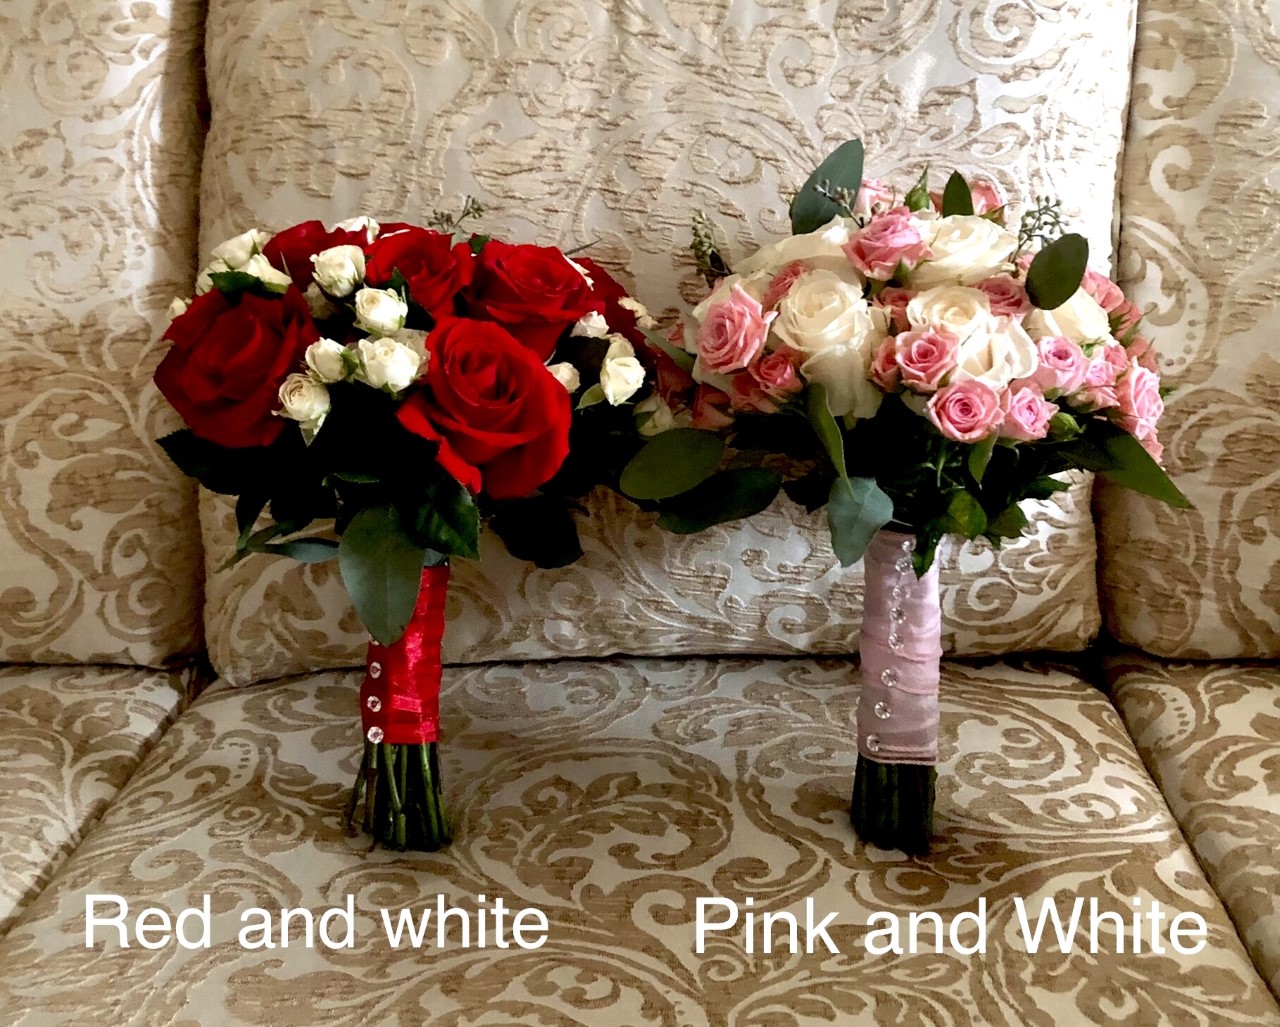 $135  Big roses /small roses and greens                                                            